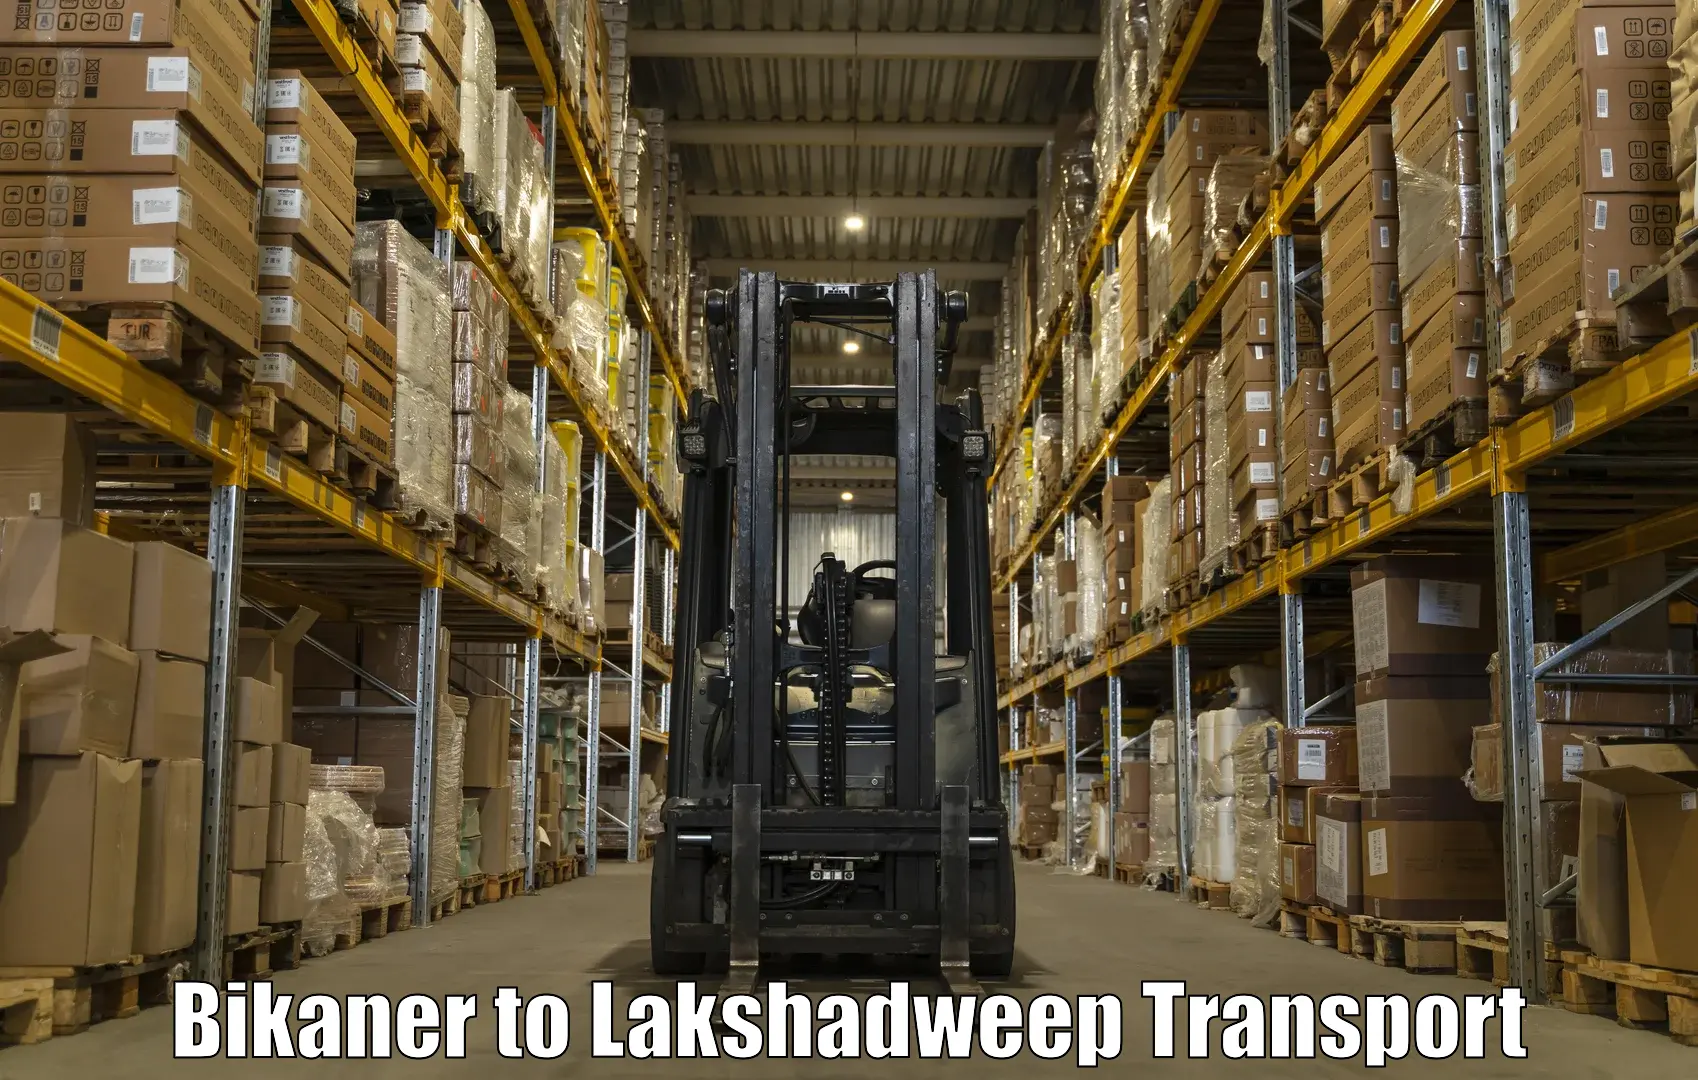 Truck transport companies in India Bikaner to Lakshadweep